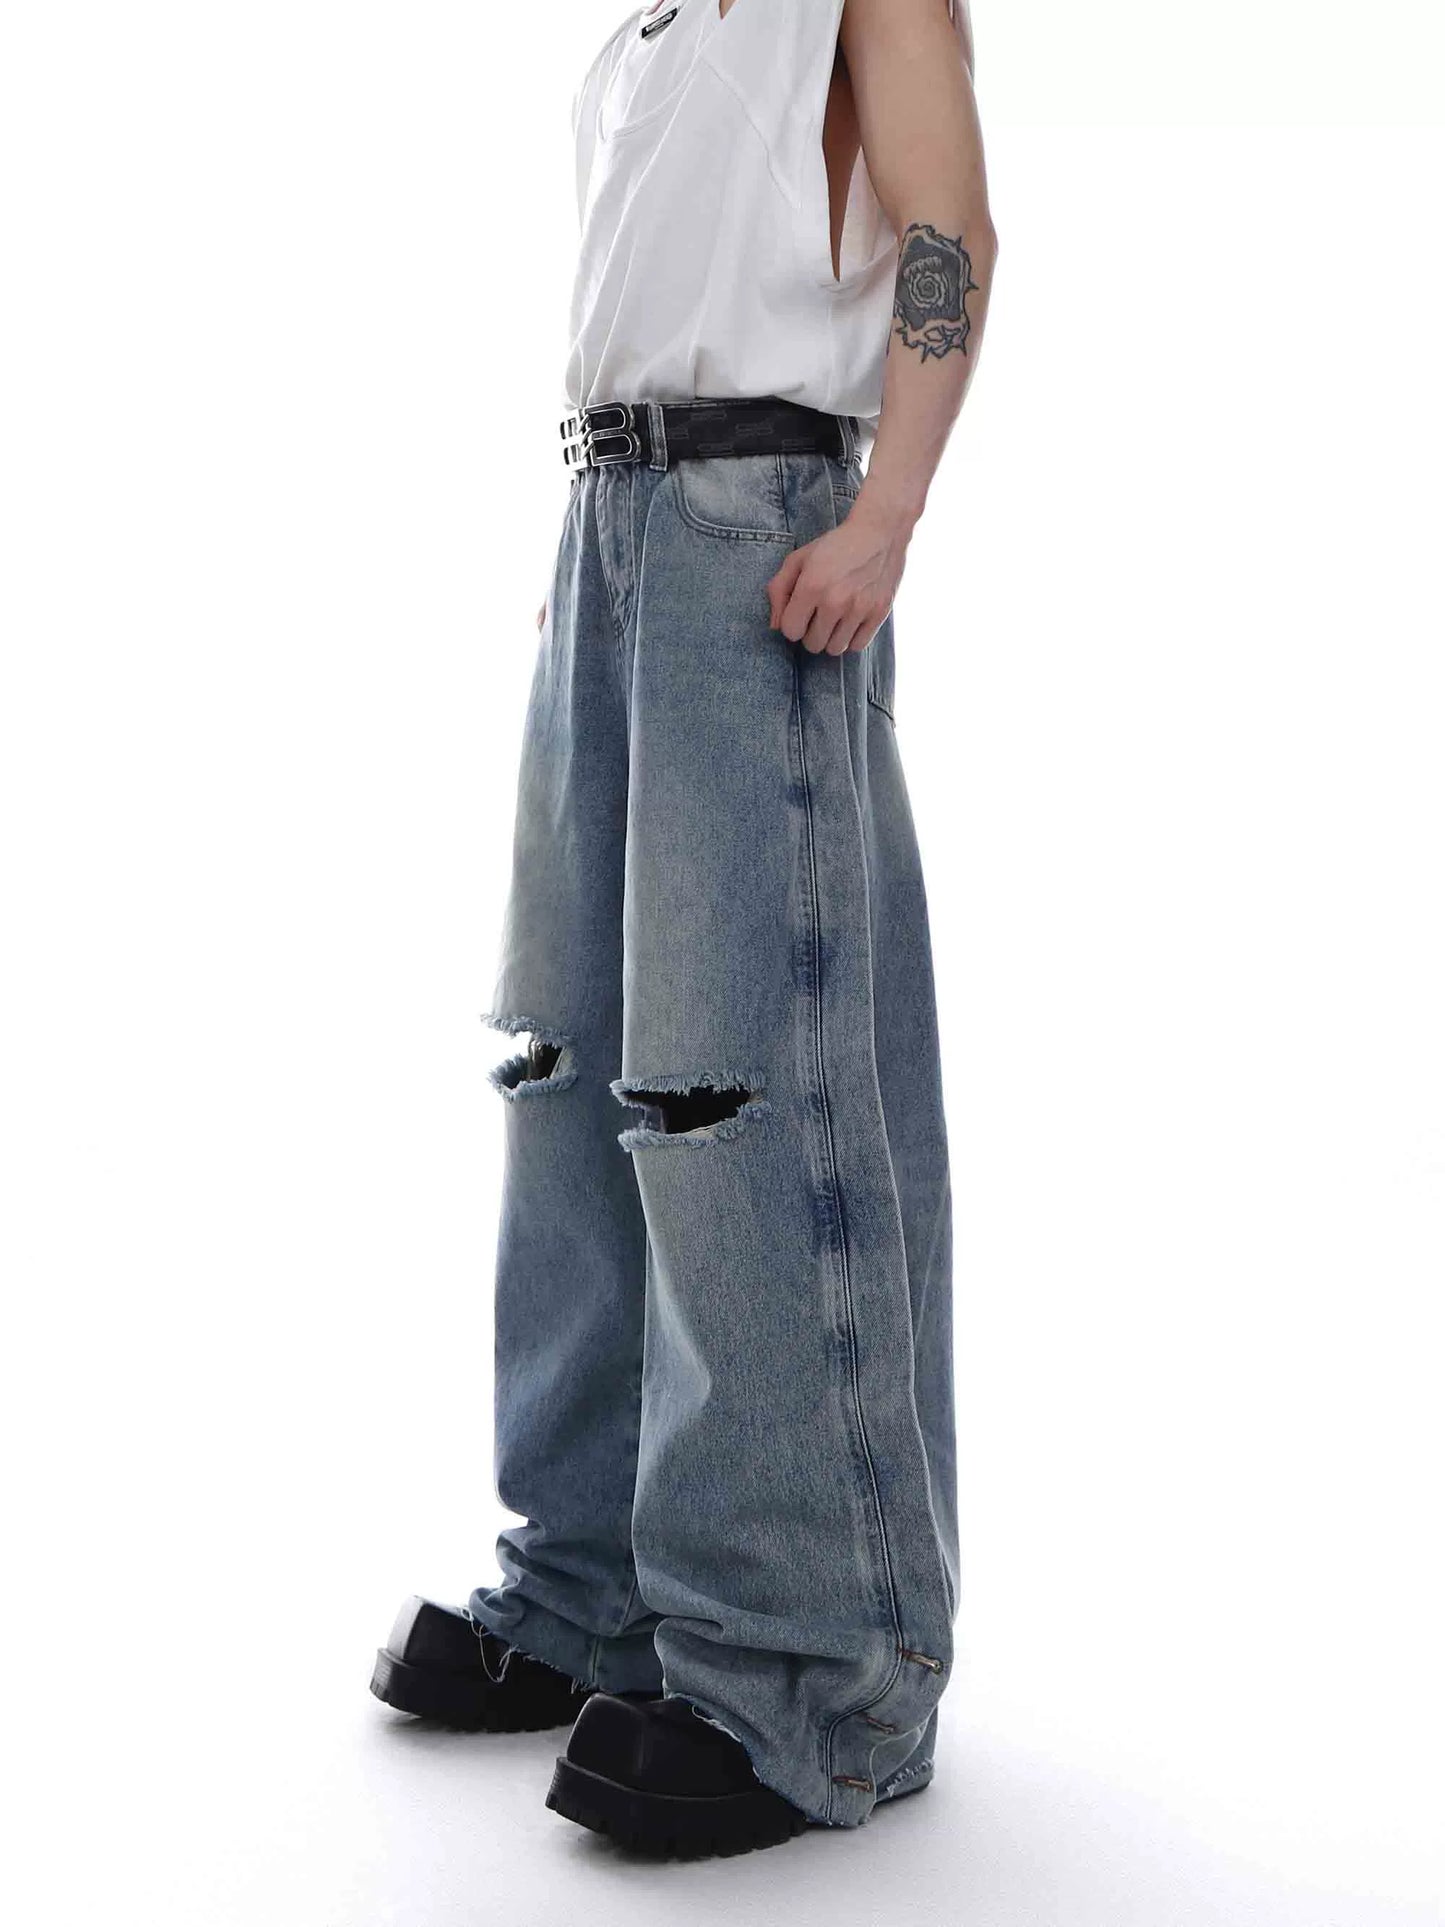 CulturE original niche washed gradient jeans heavy industry retro damage design sense straight pants casual pants